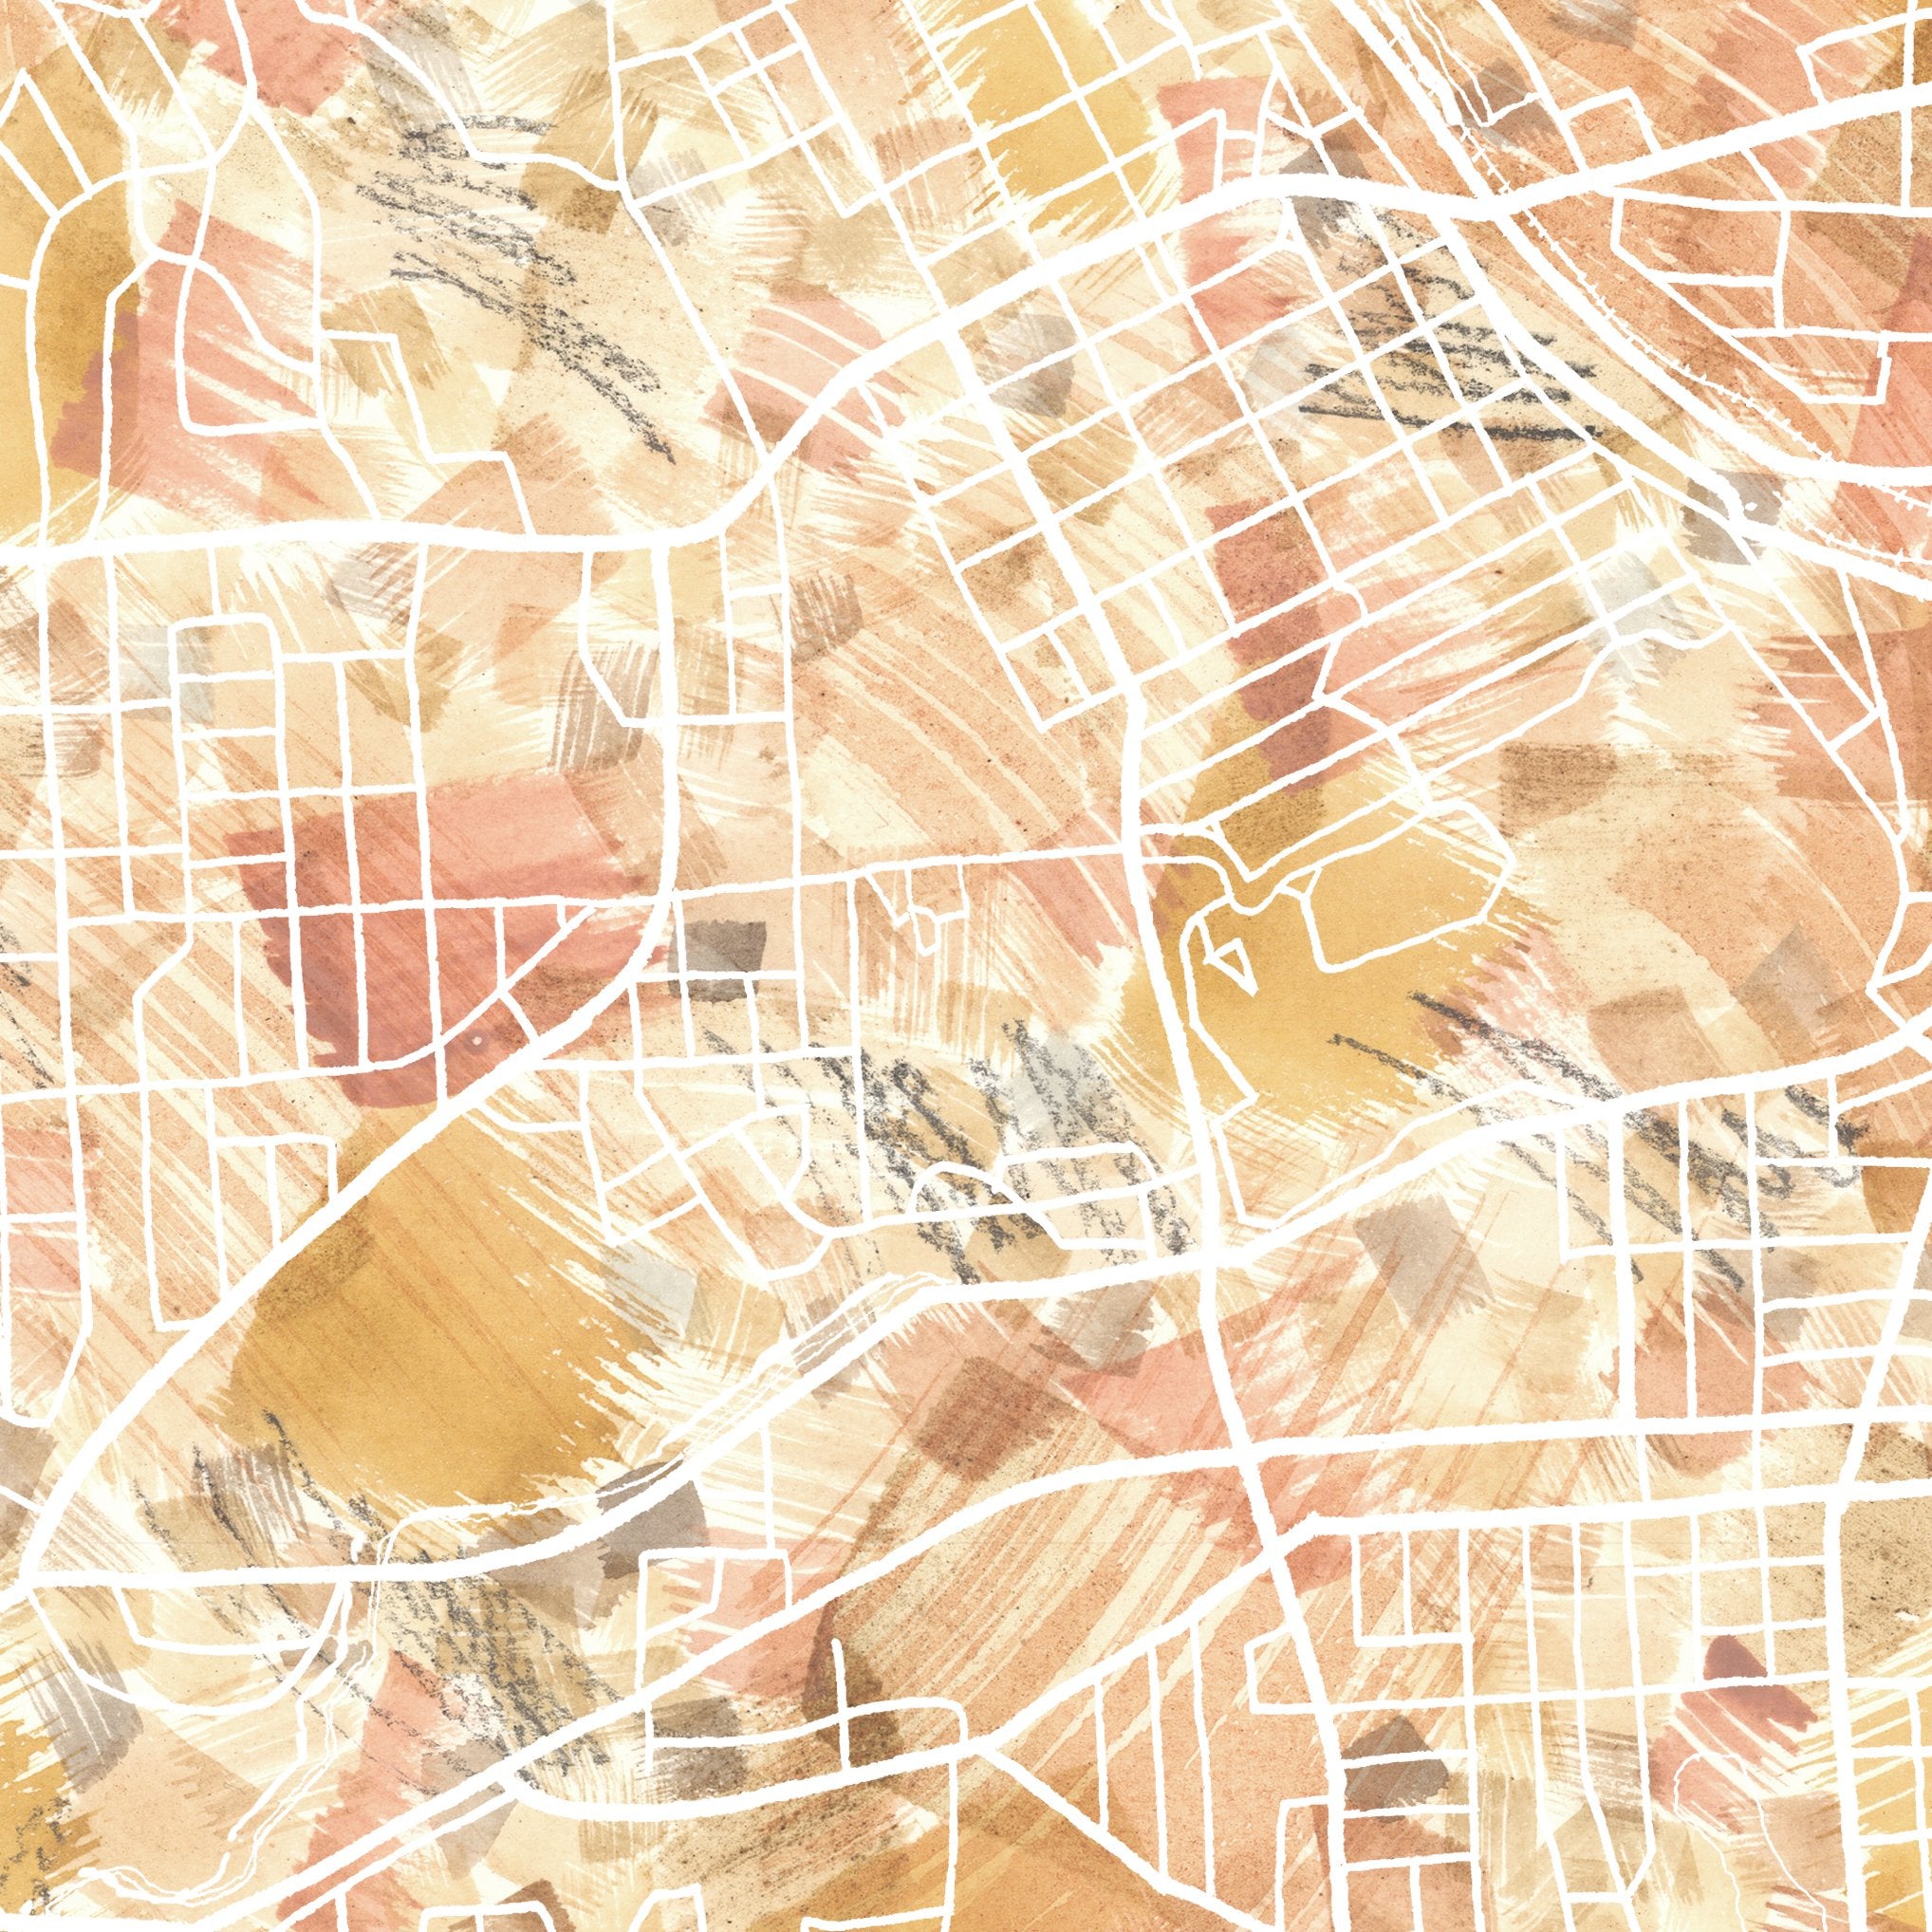 SYRACUSE Urban Fabrics City Map: PRINT